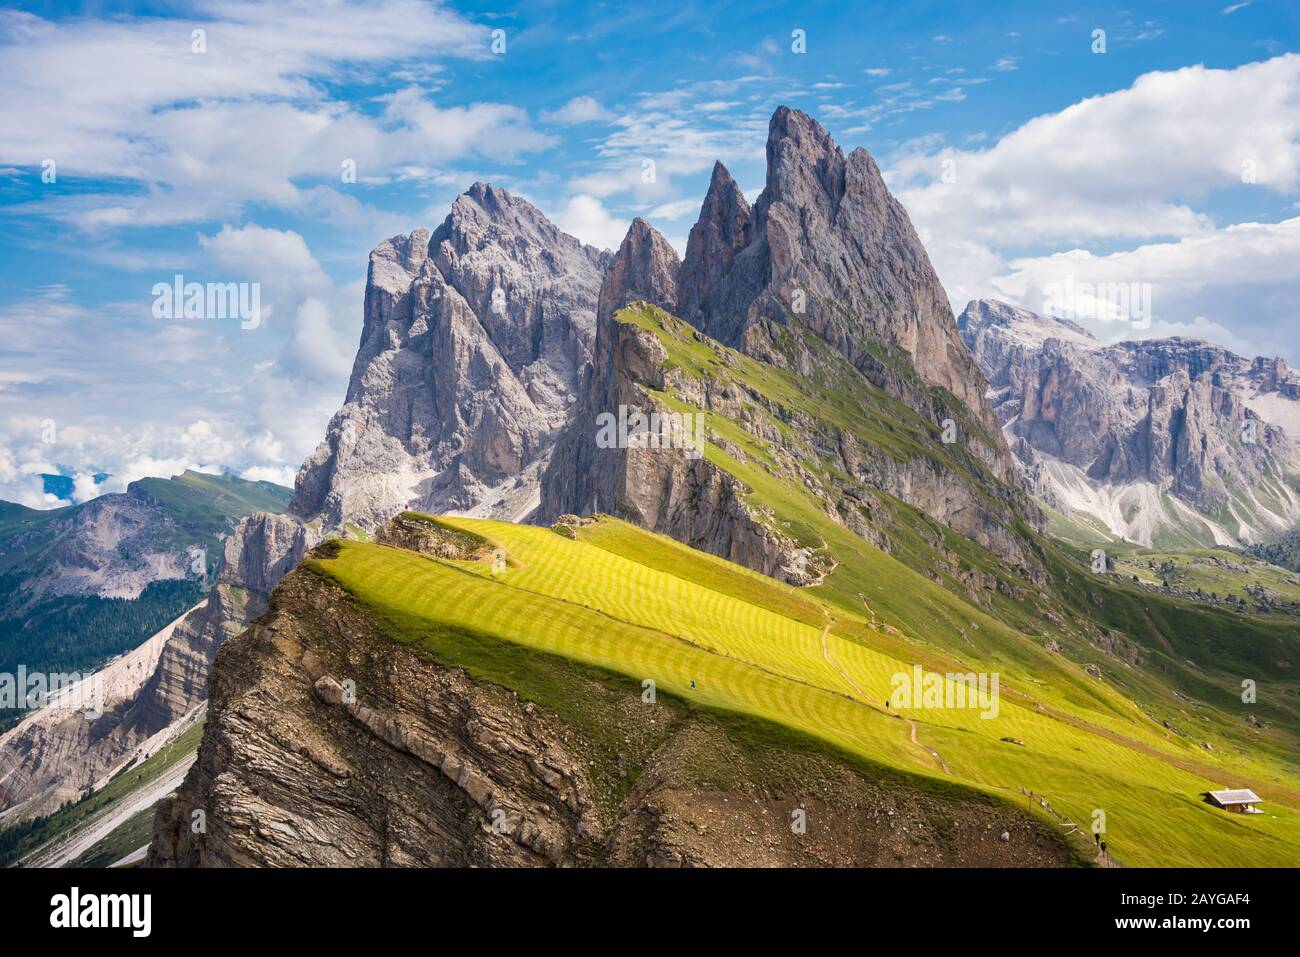 Odle group mountain range in Dolomite alps, Italy Stock Photo